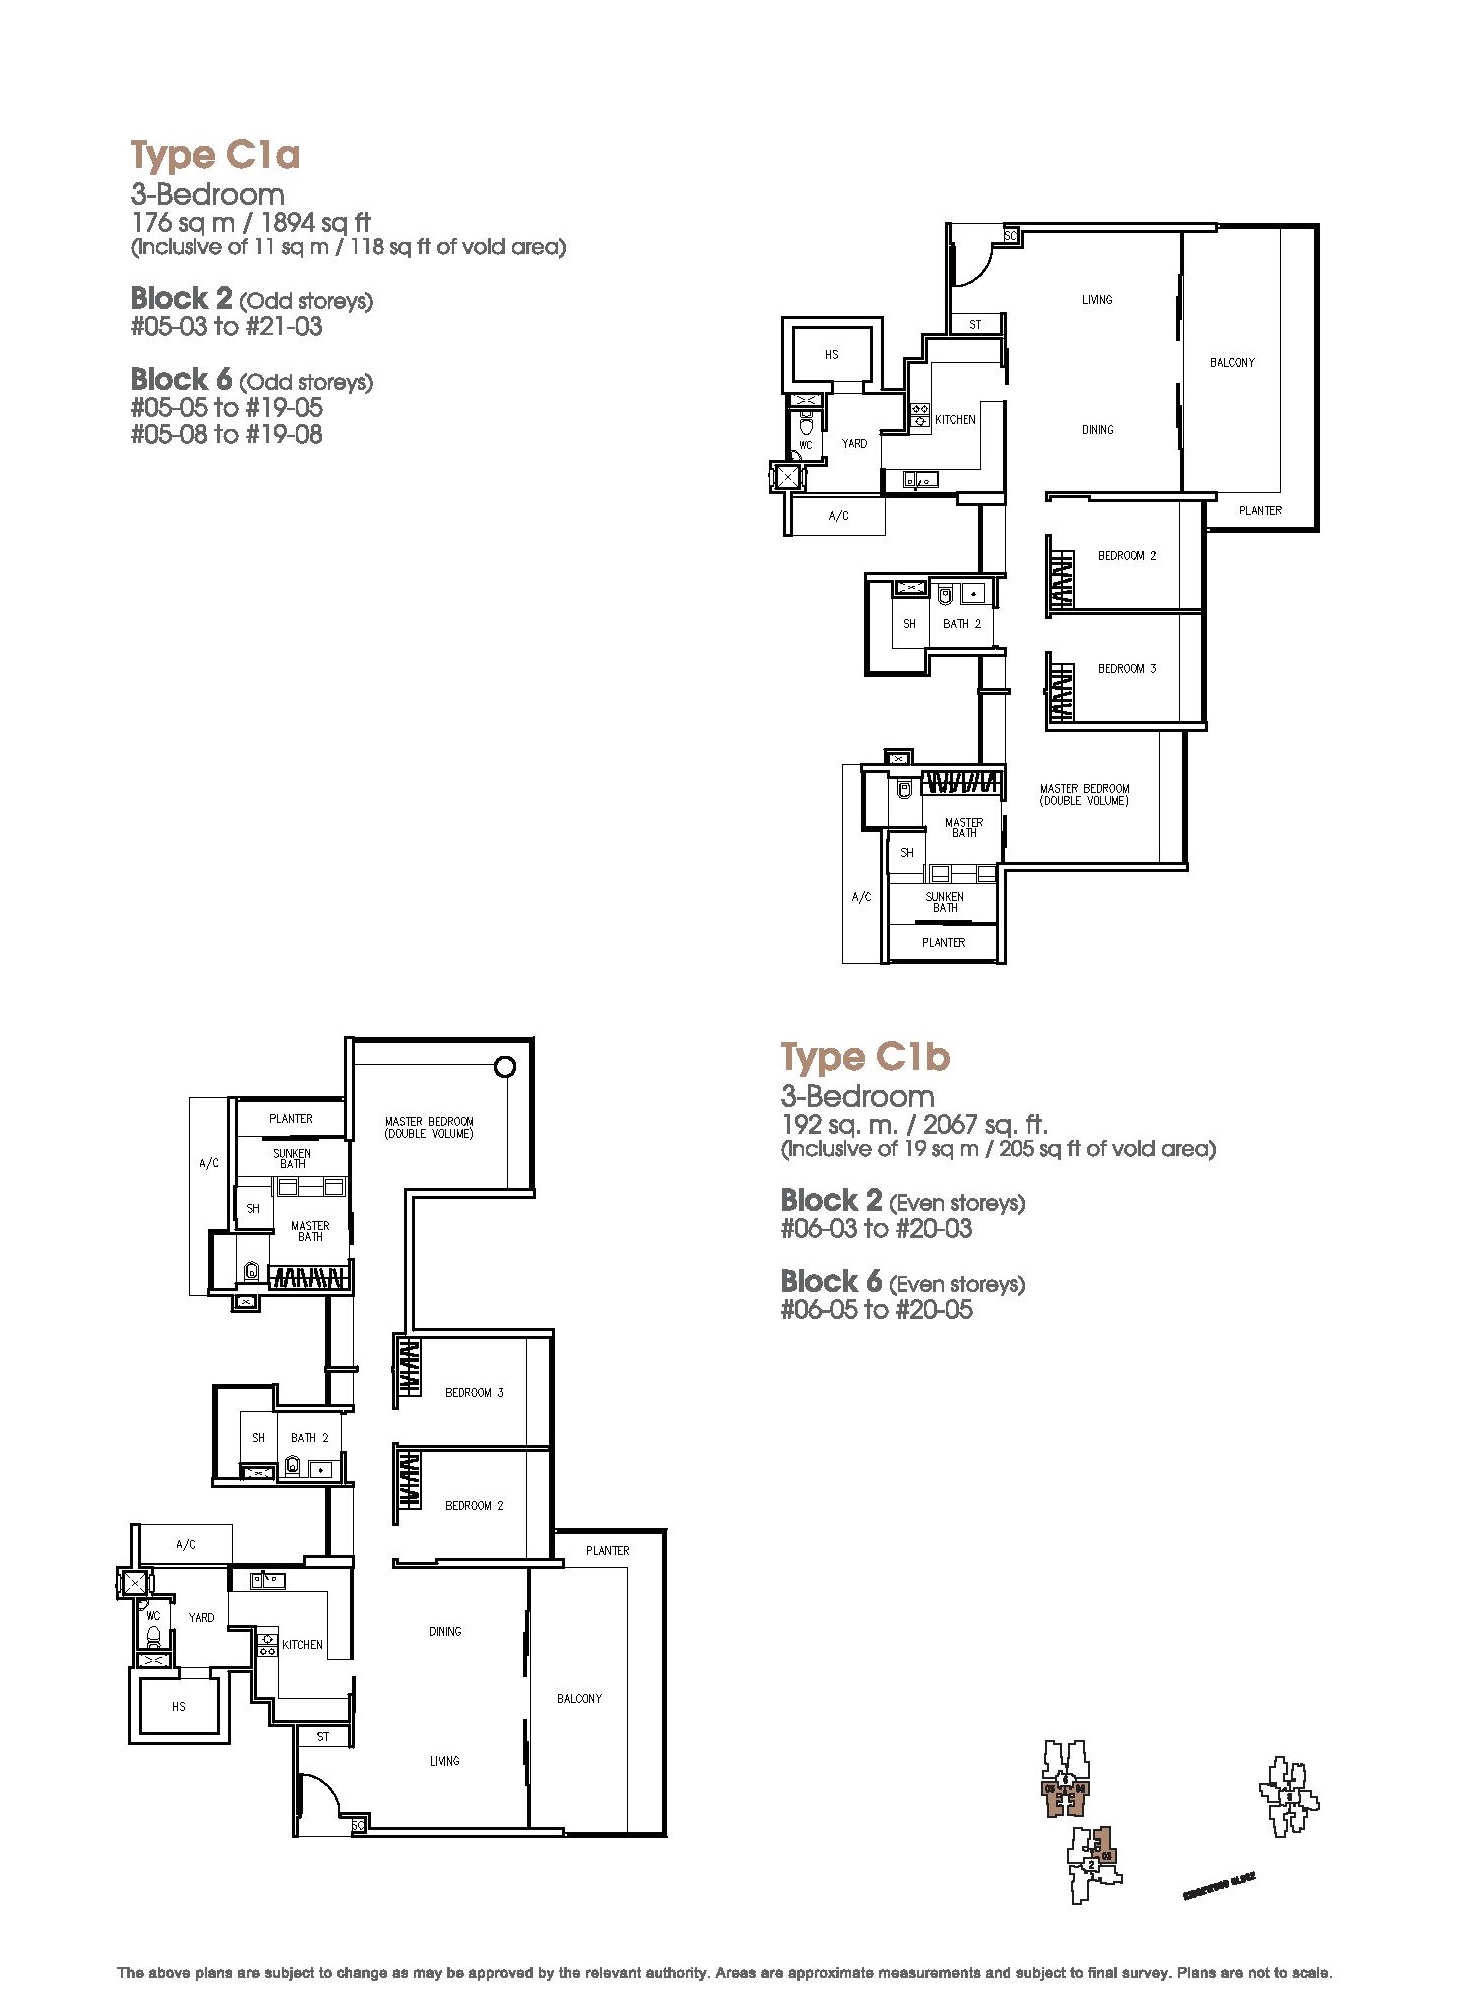 The Trizon 3 Bedroom Floor Plans Type C1a, C1b